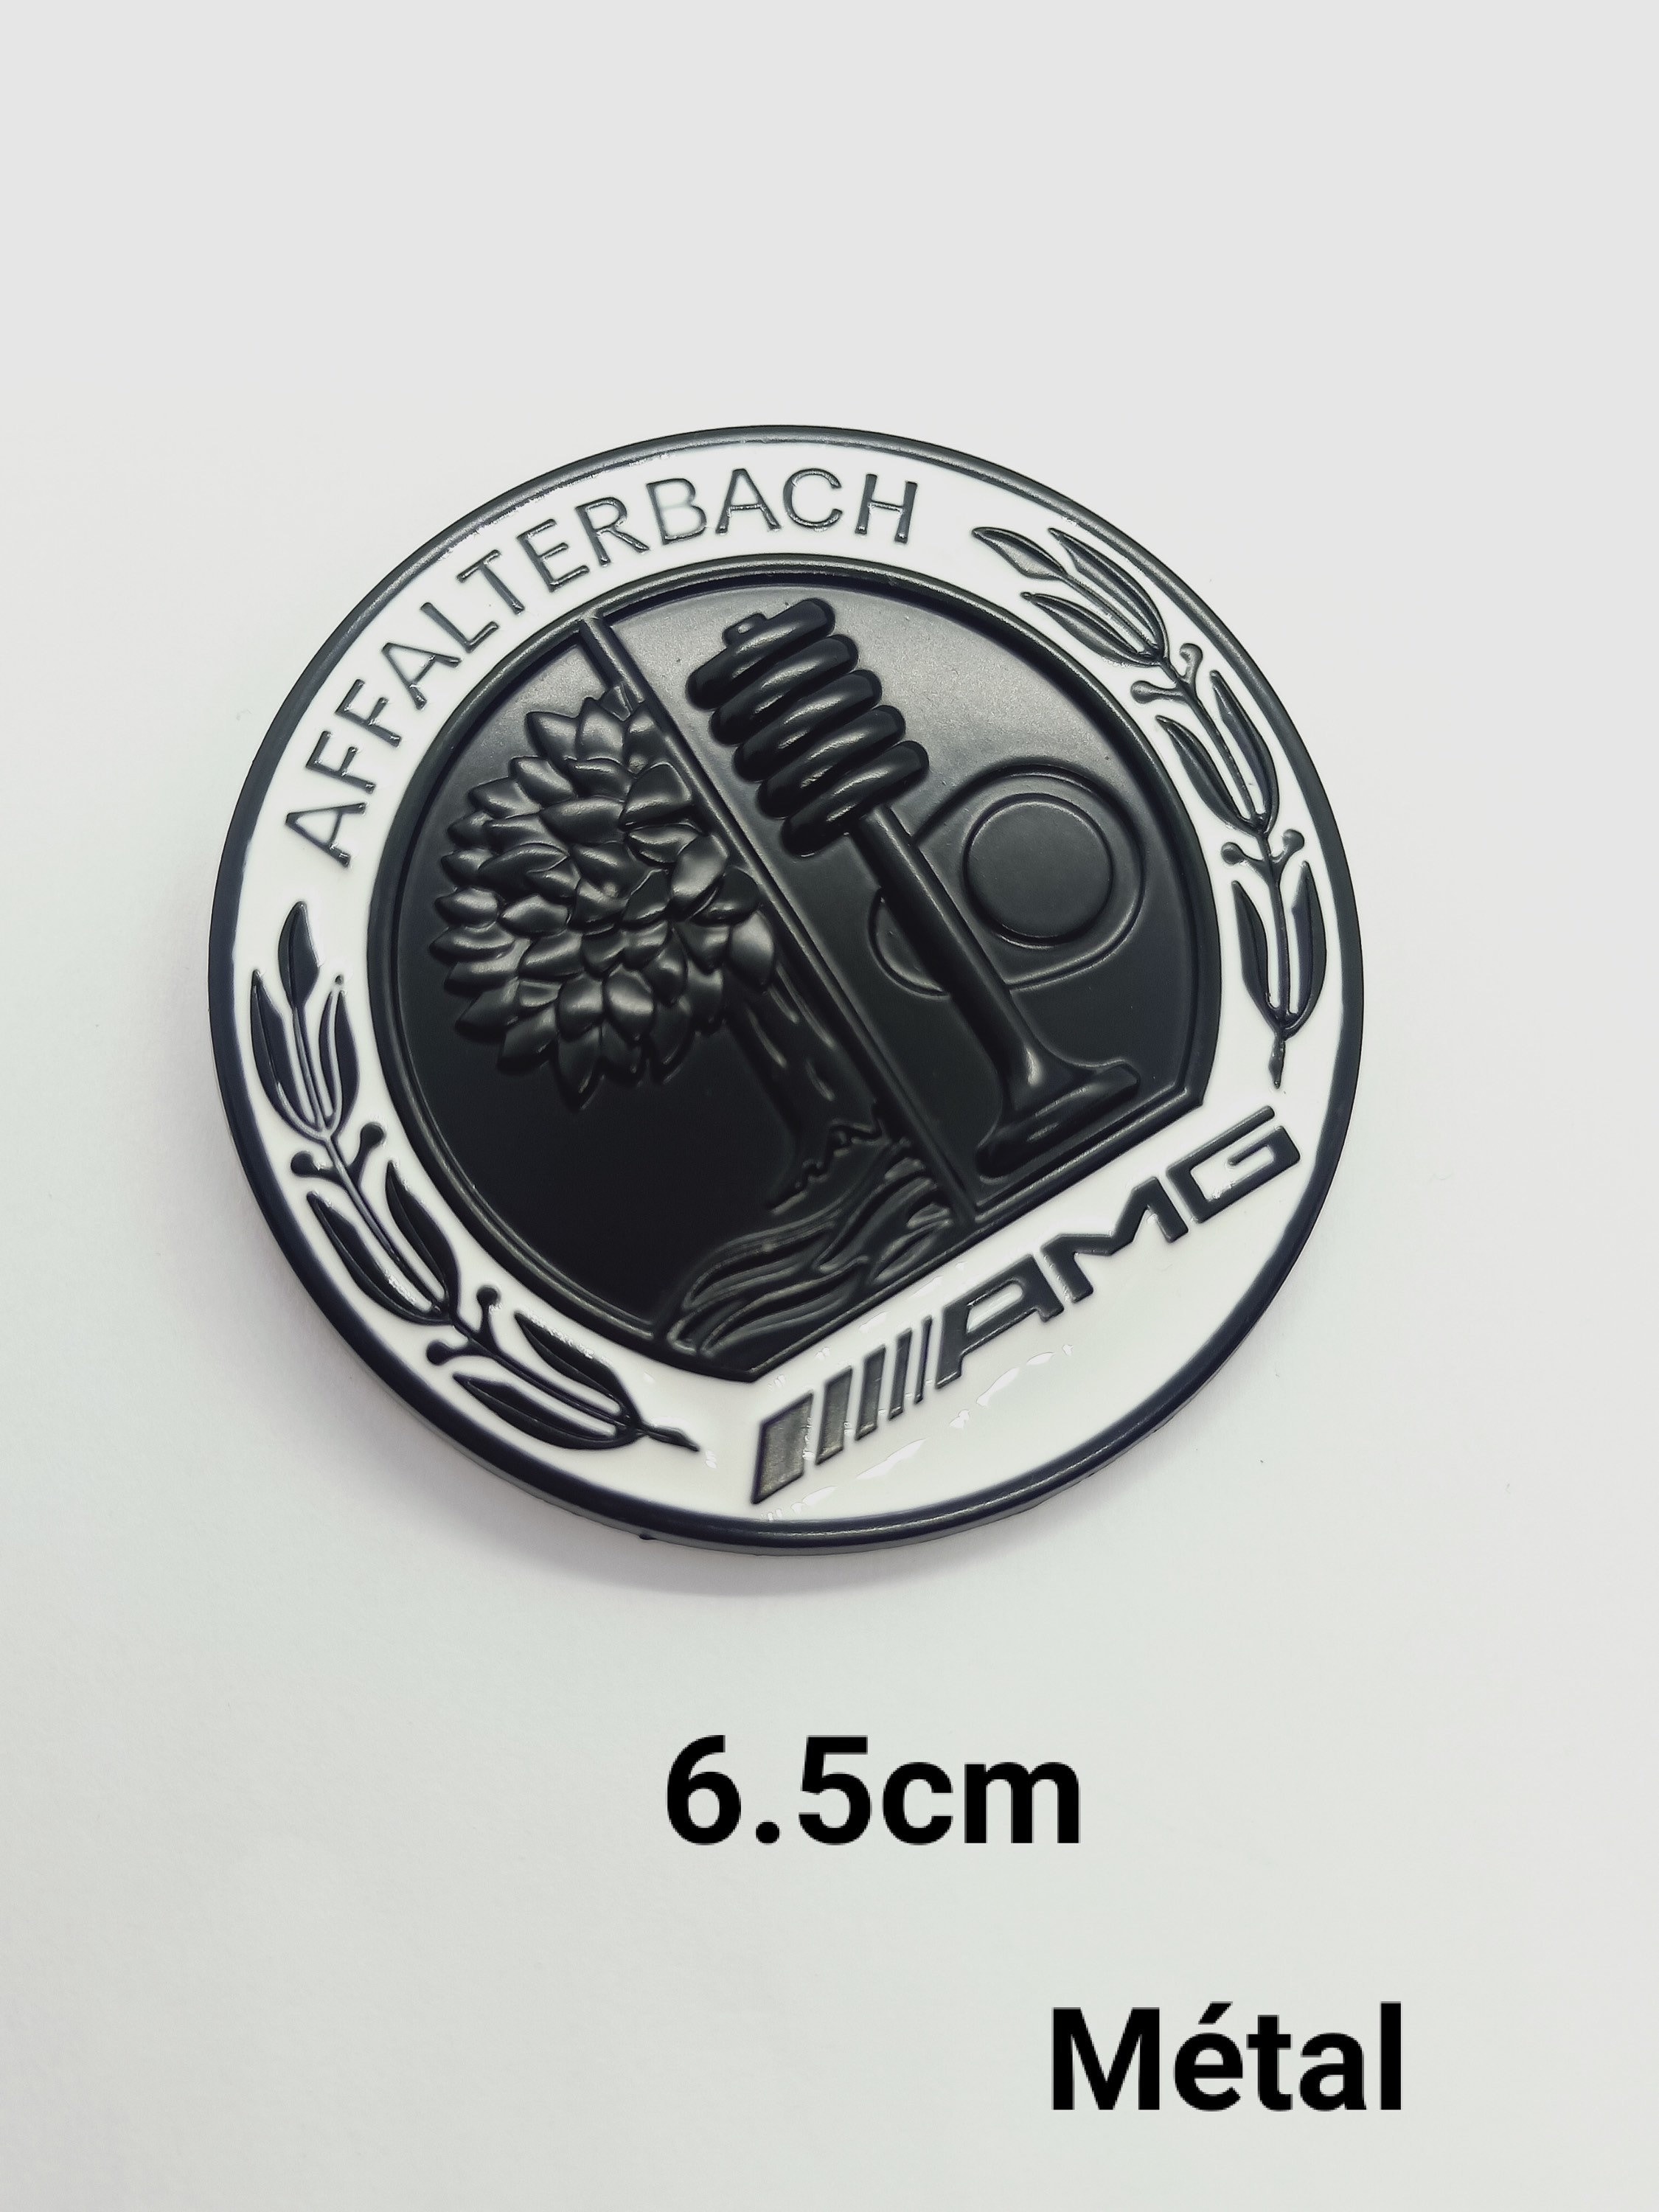 AMG Mercedes Decal Interior Decoration Emblem Sticker -  Israel